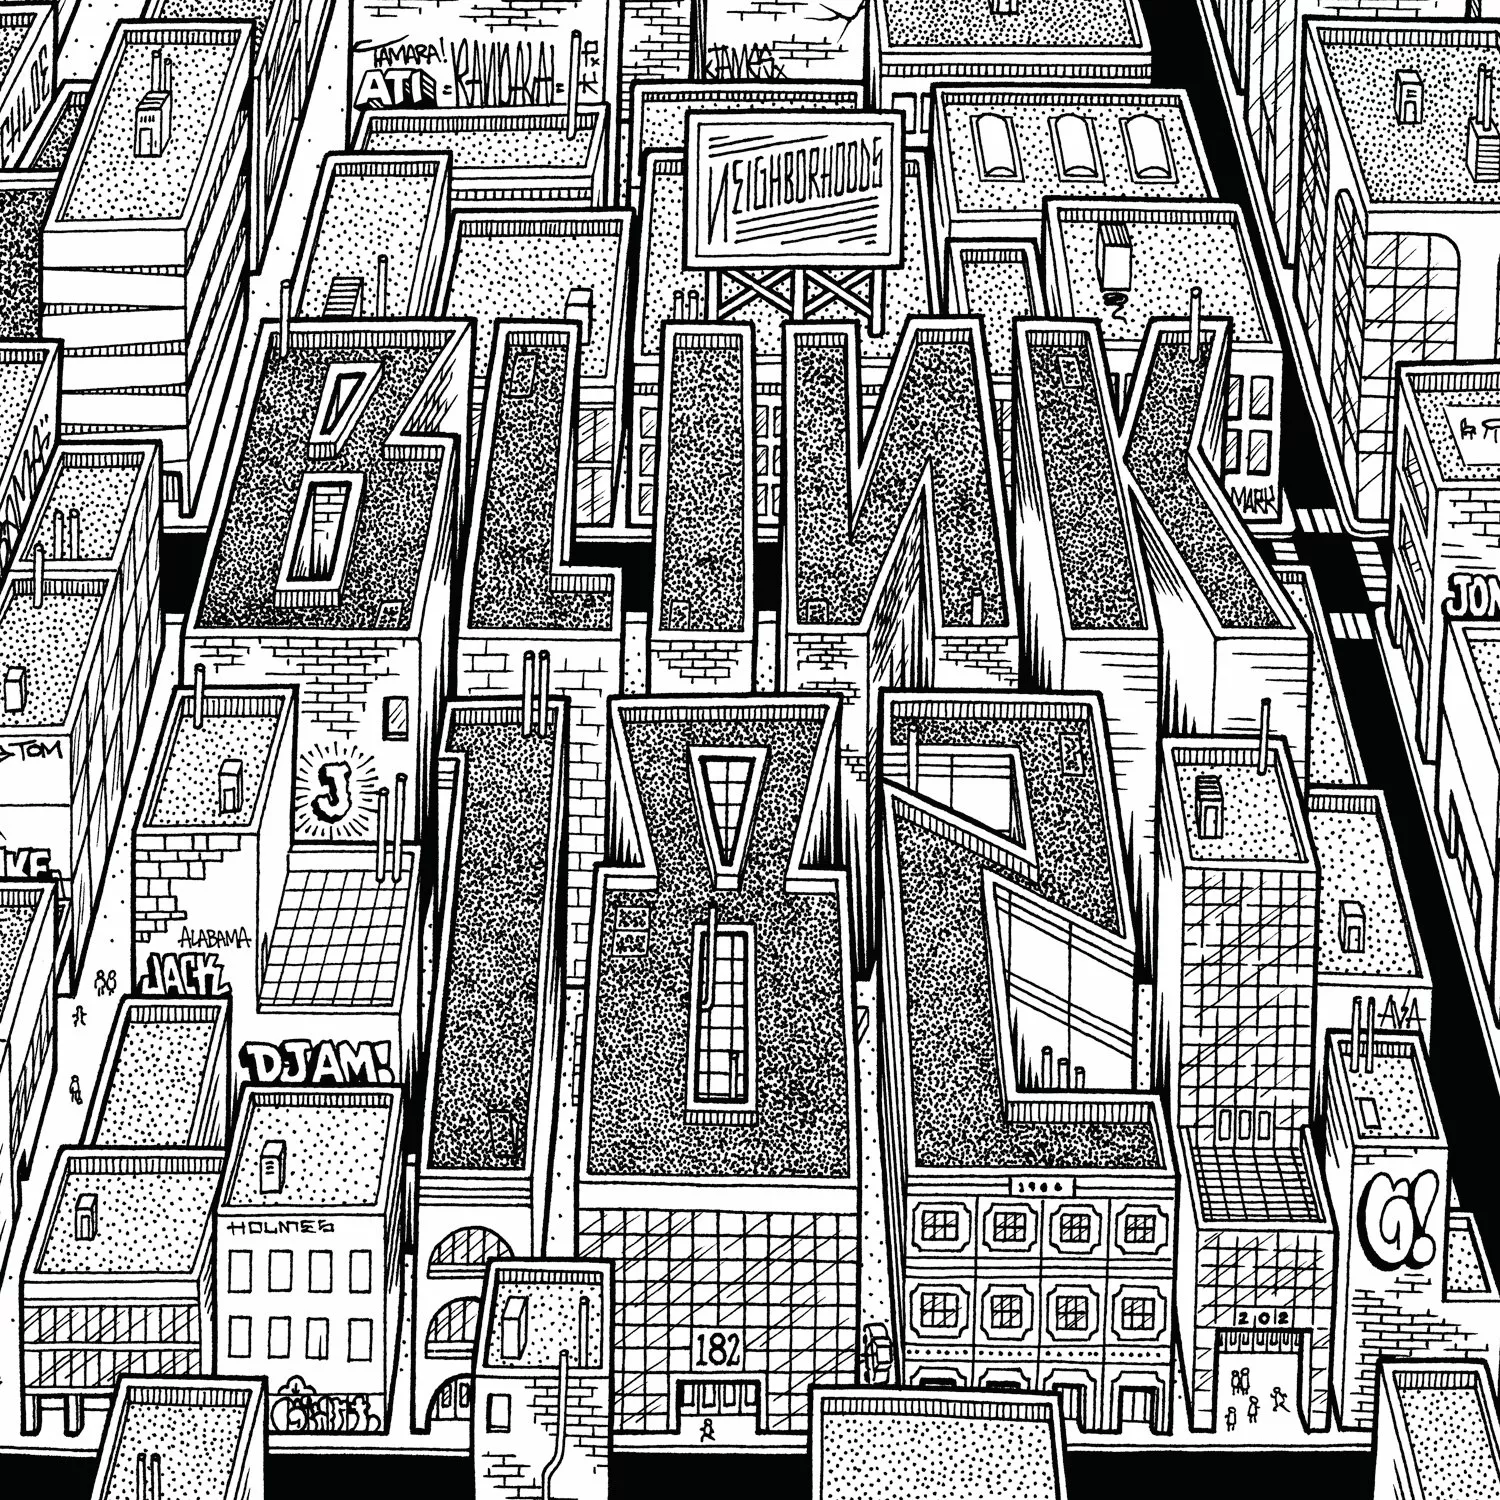 Neighborhoods - Blink-182